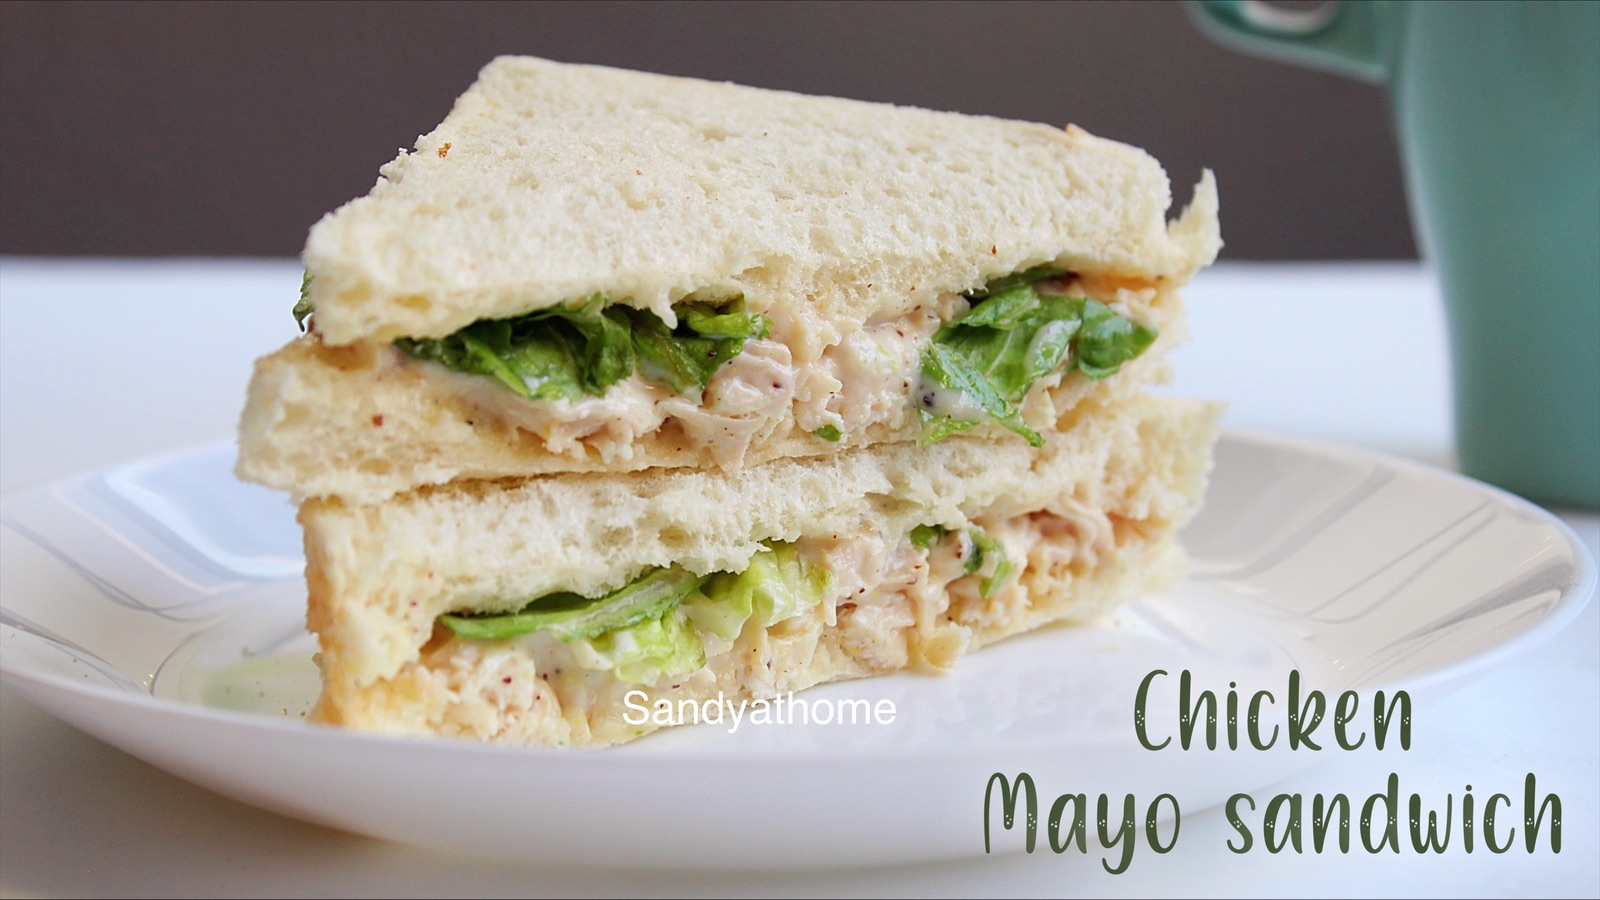 Chicken mayo sandwich, Mayo chicken sandwich